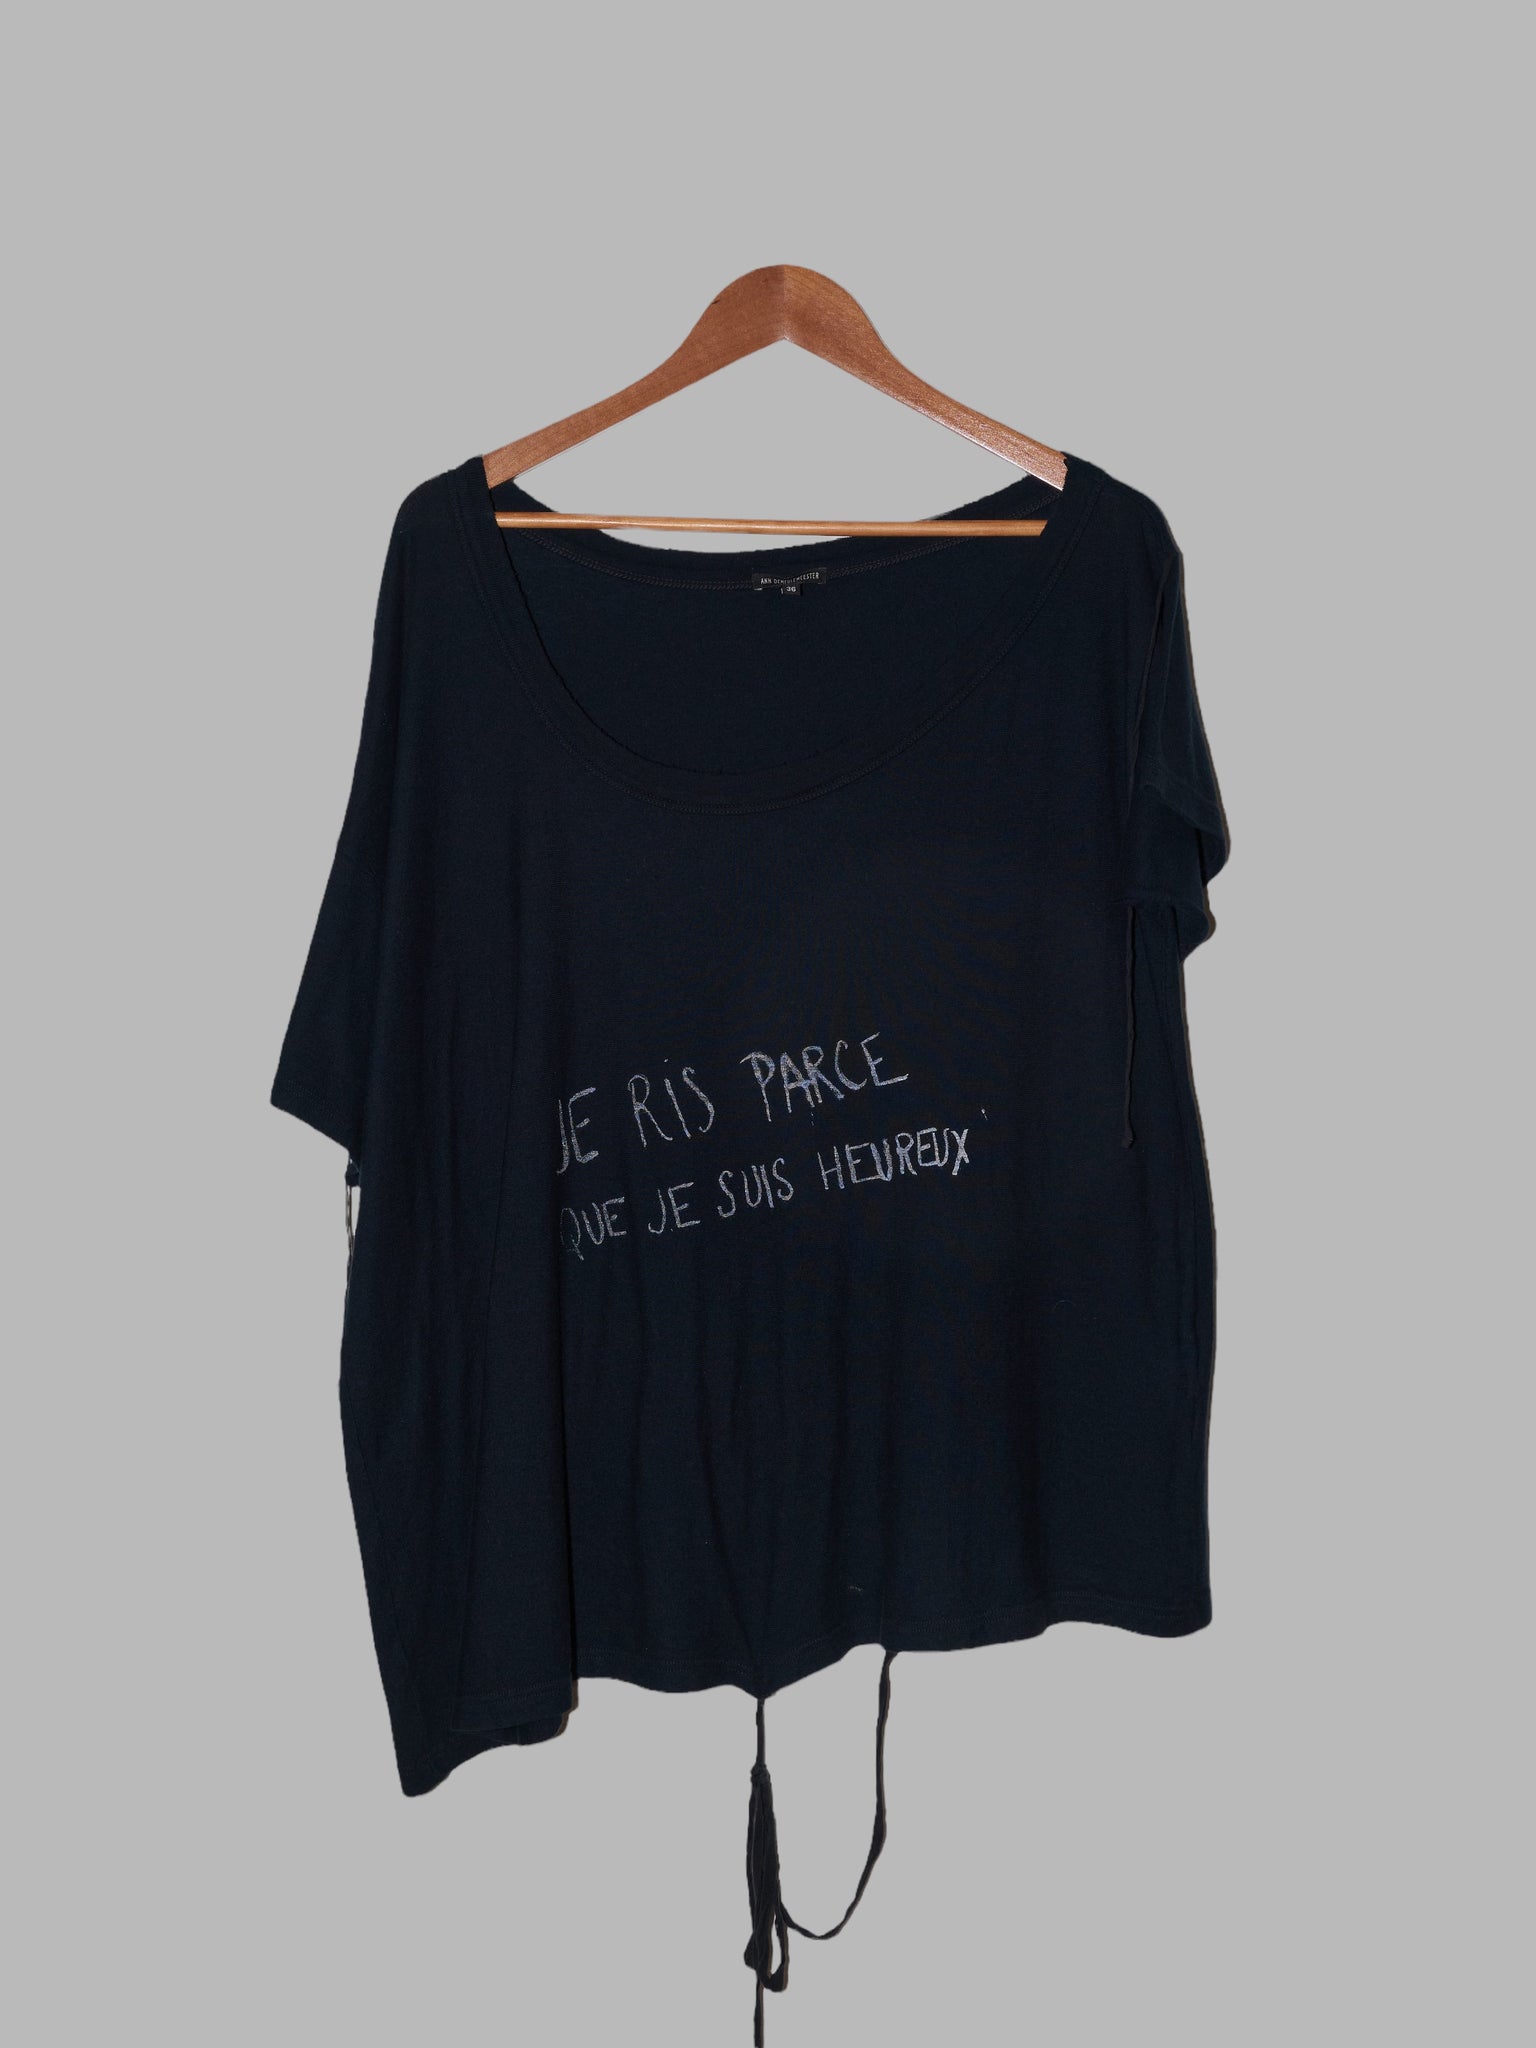 Ann Demeulemeester black low neck “I laugh because I’m happy” slogan t-shirt